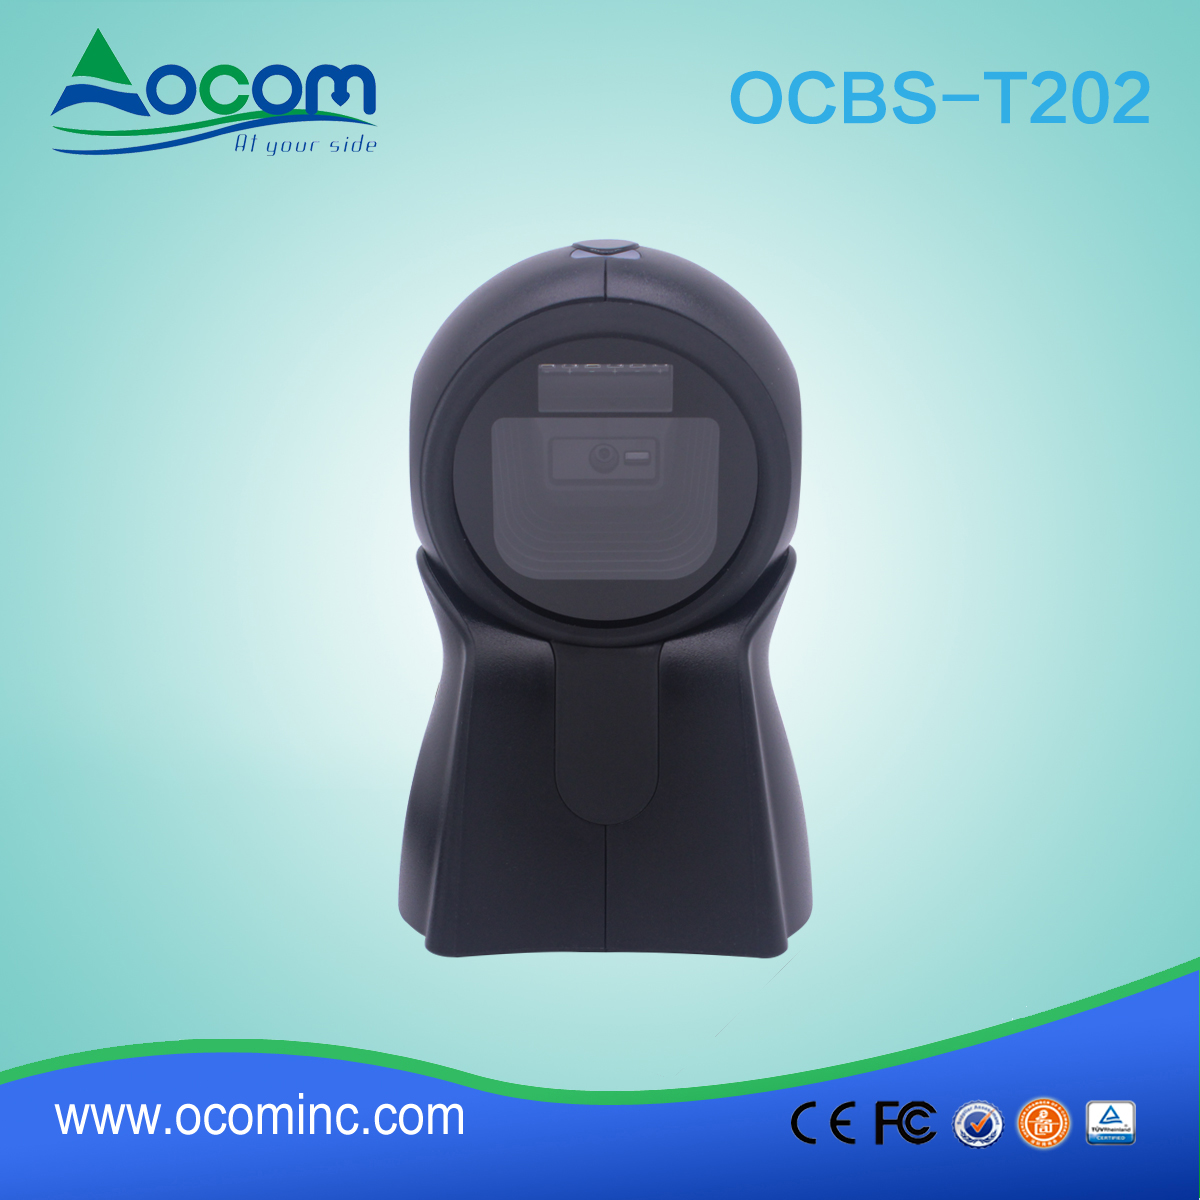 OCBS-T202 Image 2D QR Code Omni Direccional Barcode Scanner